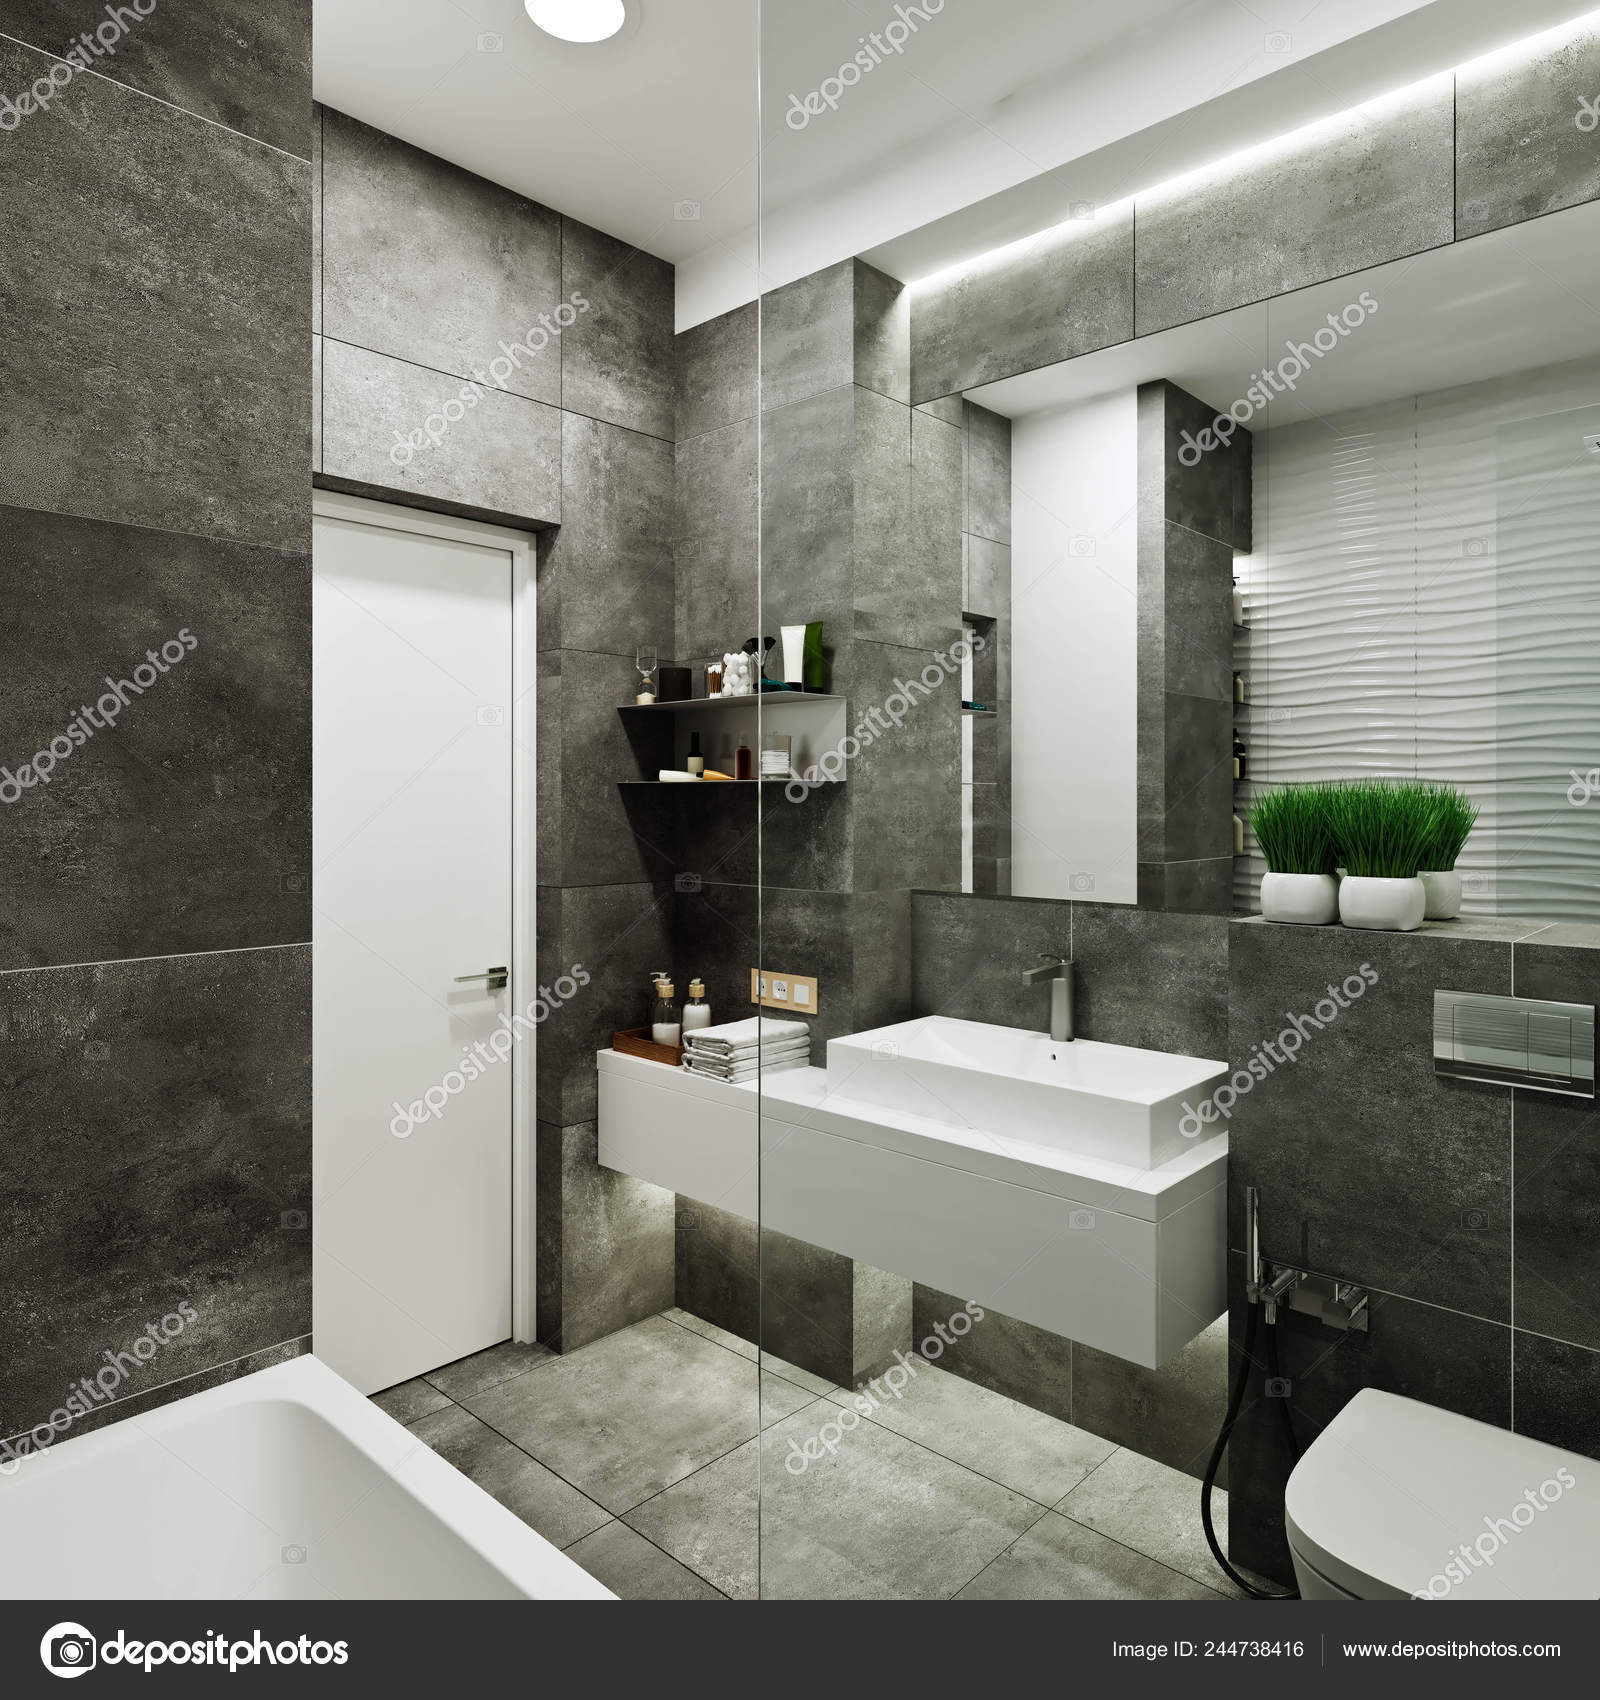 Modern Bathroom Design With Tiles Under, Modern Bathroom Tile